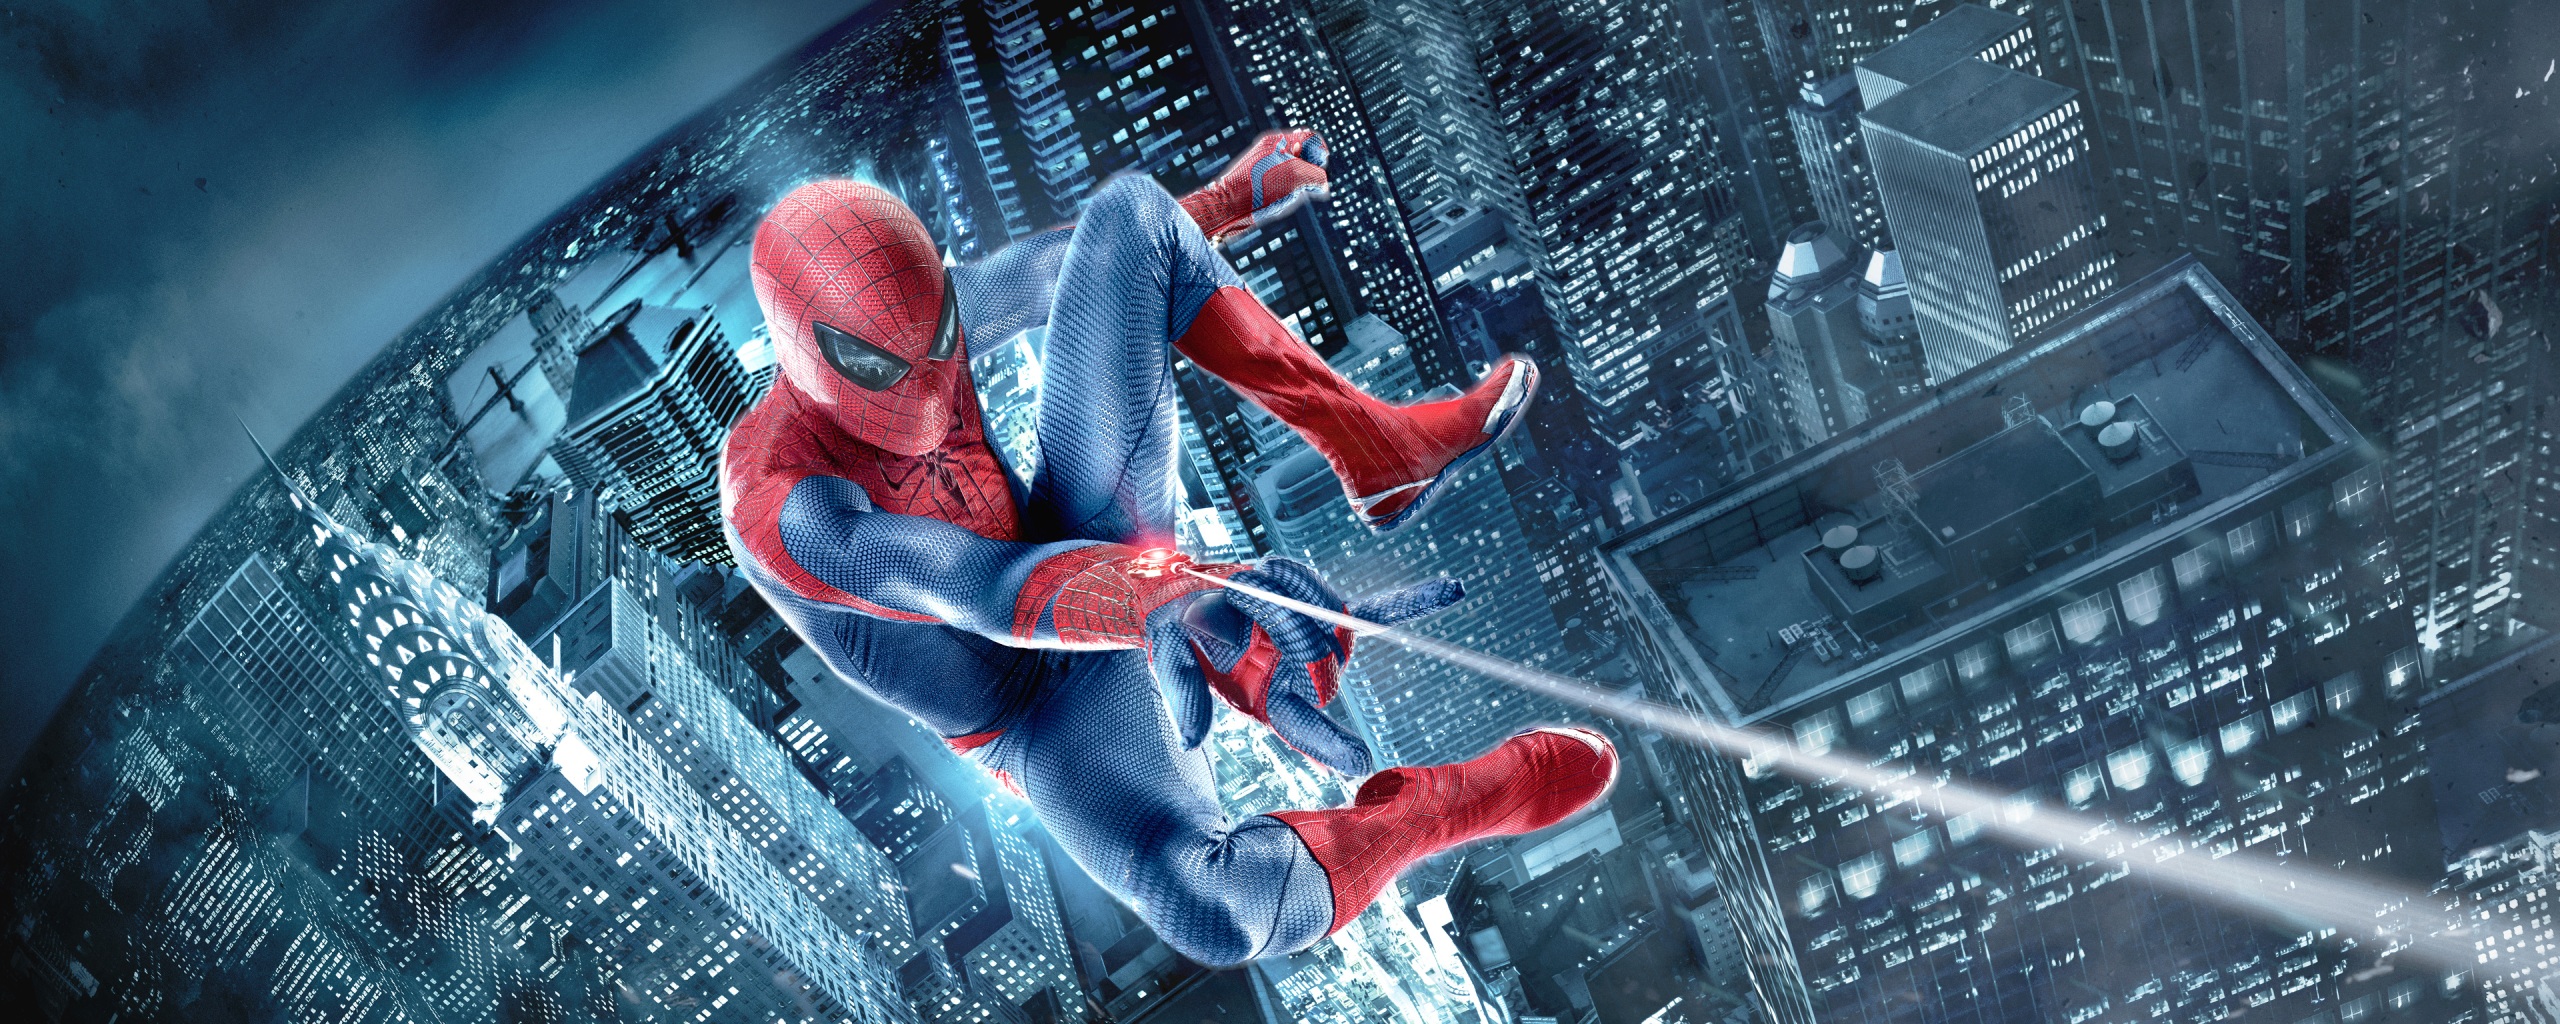 The Amazing Spiderman - 4k Wallpapers - 40.000+ ipad wallpapers 4k - 4k ...